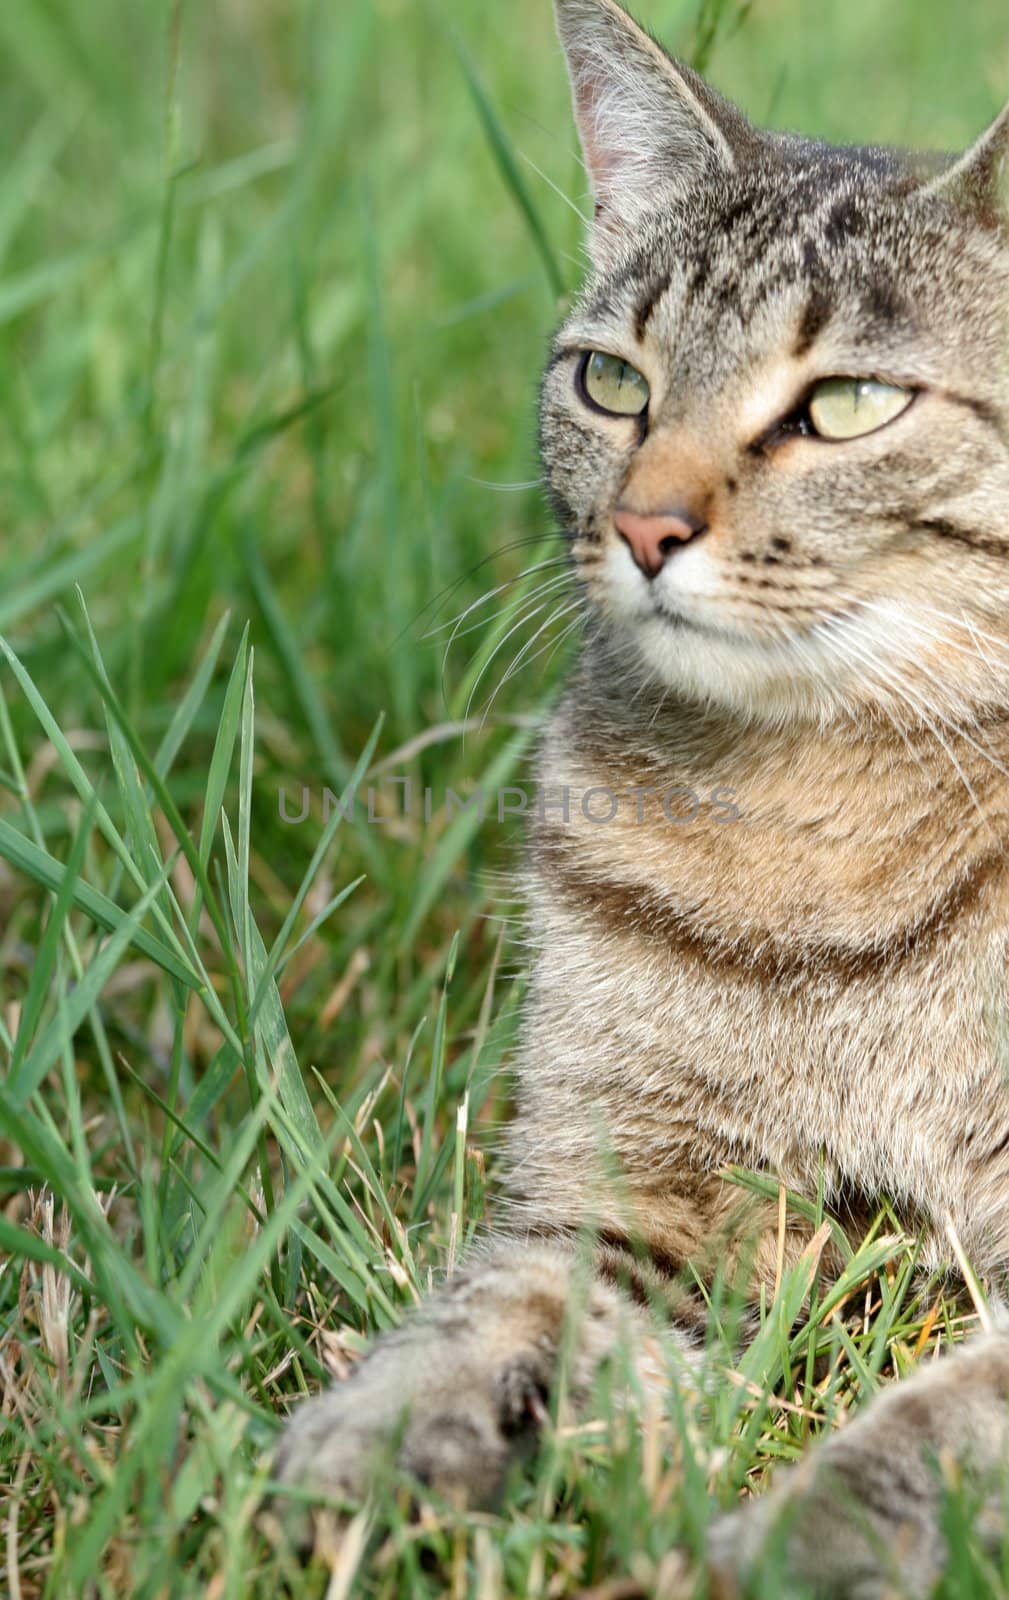 GRay tabby cat resting in grass by jarenwicklund